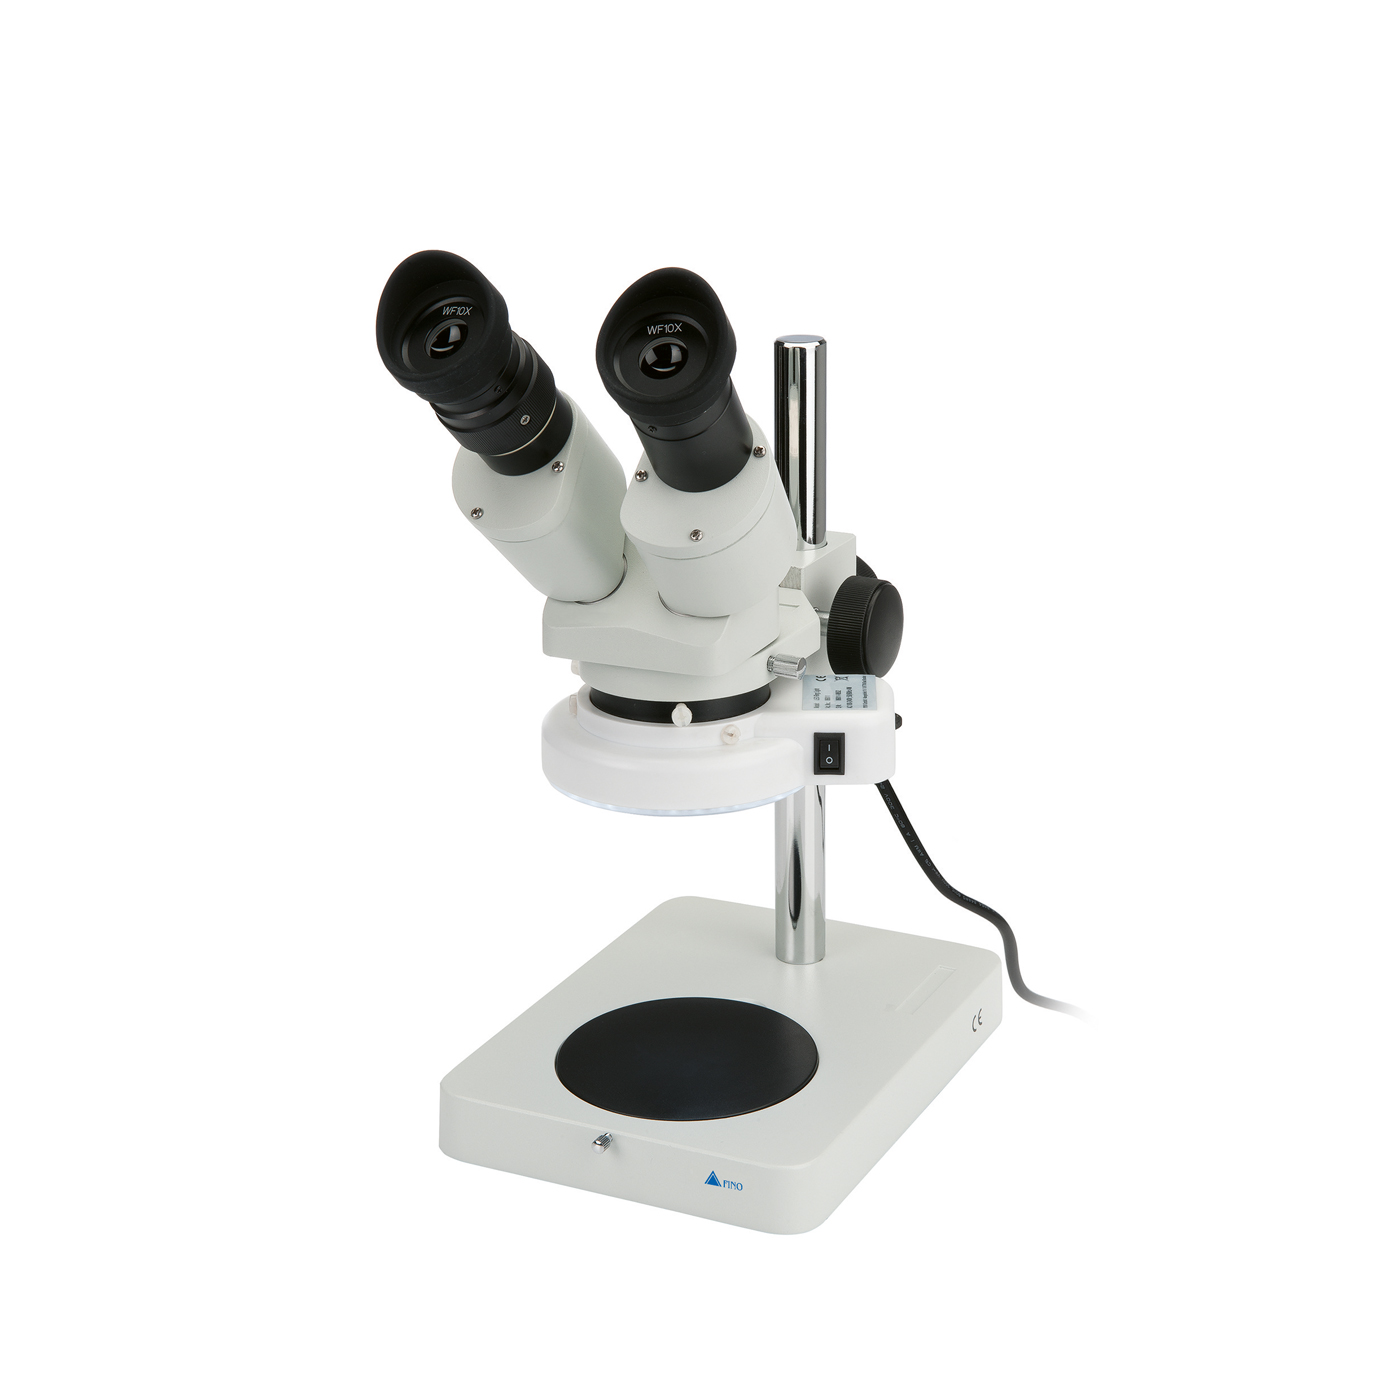 FINO Stereo-Mikroskop mit Stativ - 1 Stück